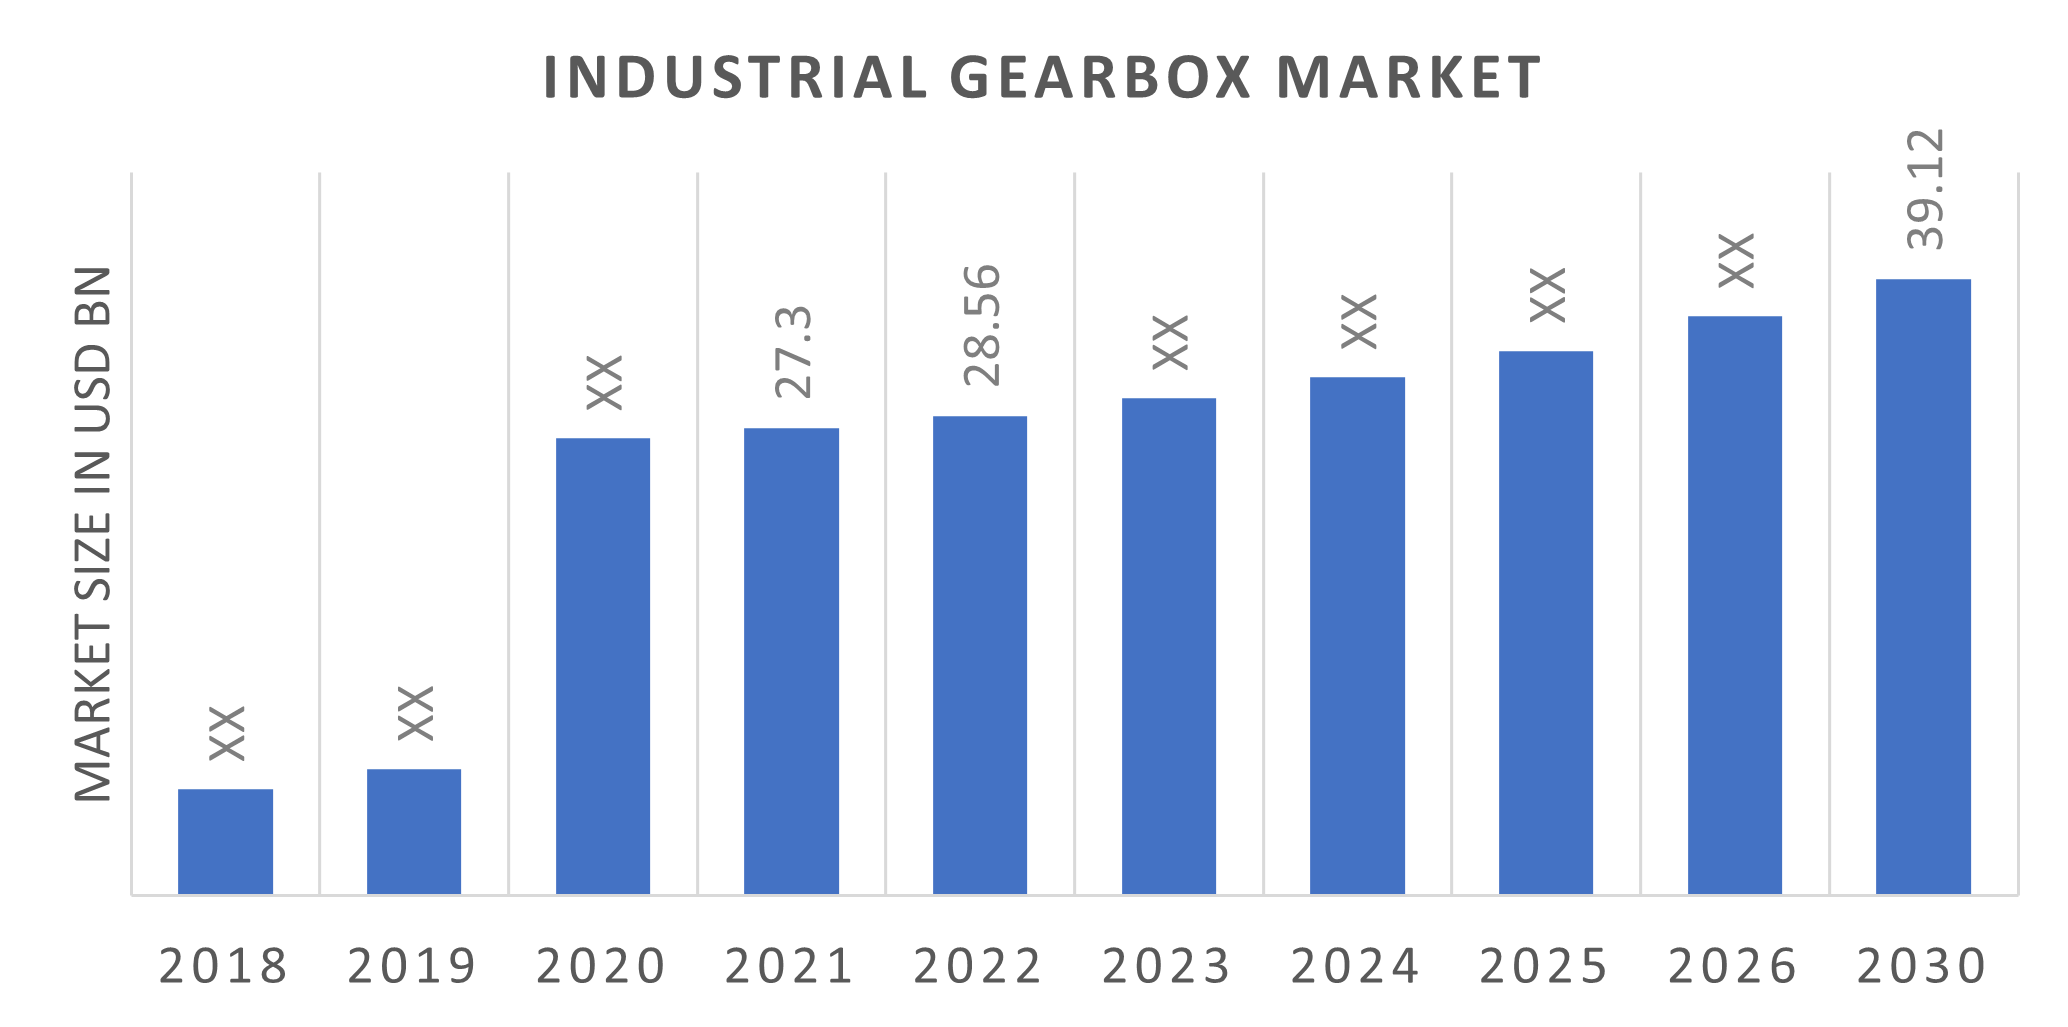 Global Industrial Gearbox Market Overview